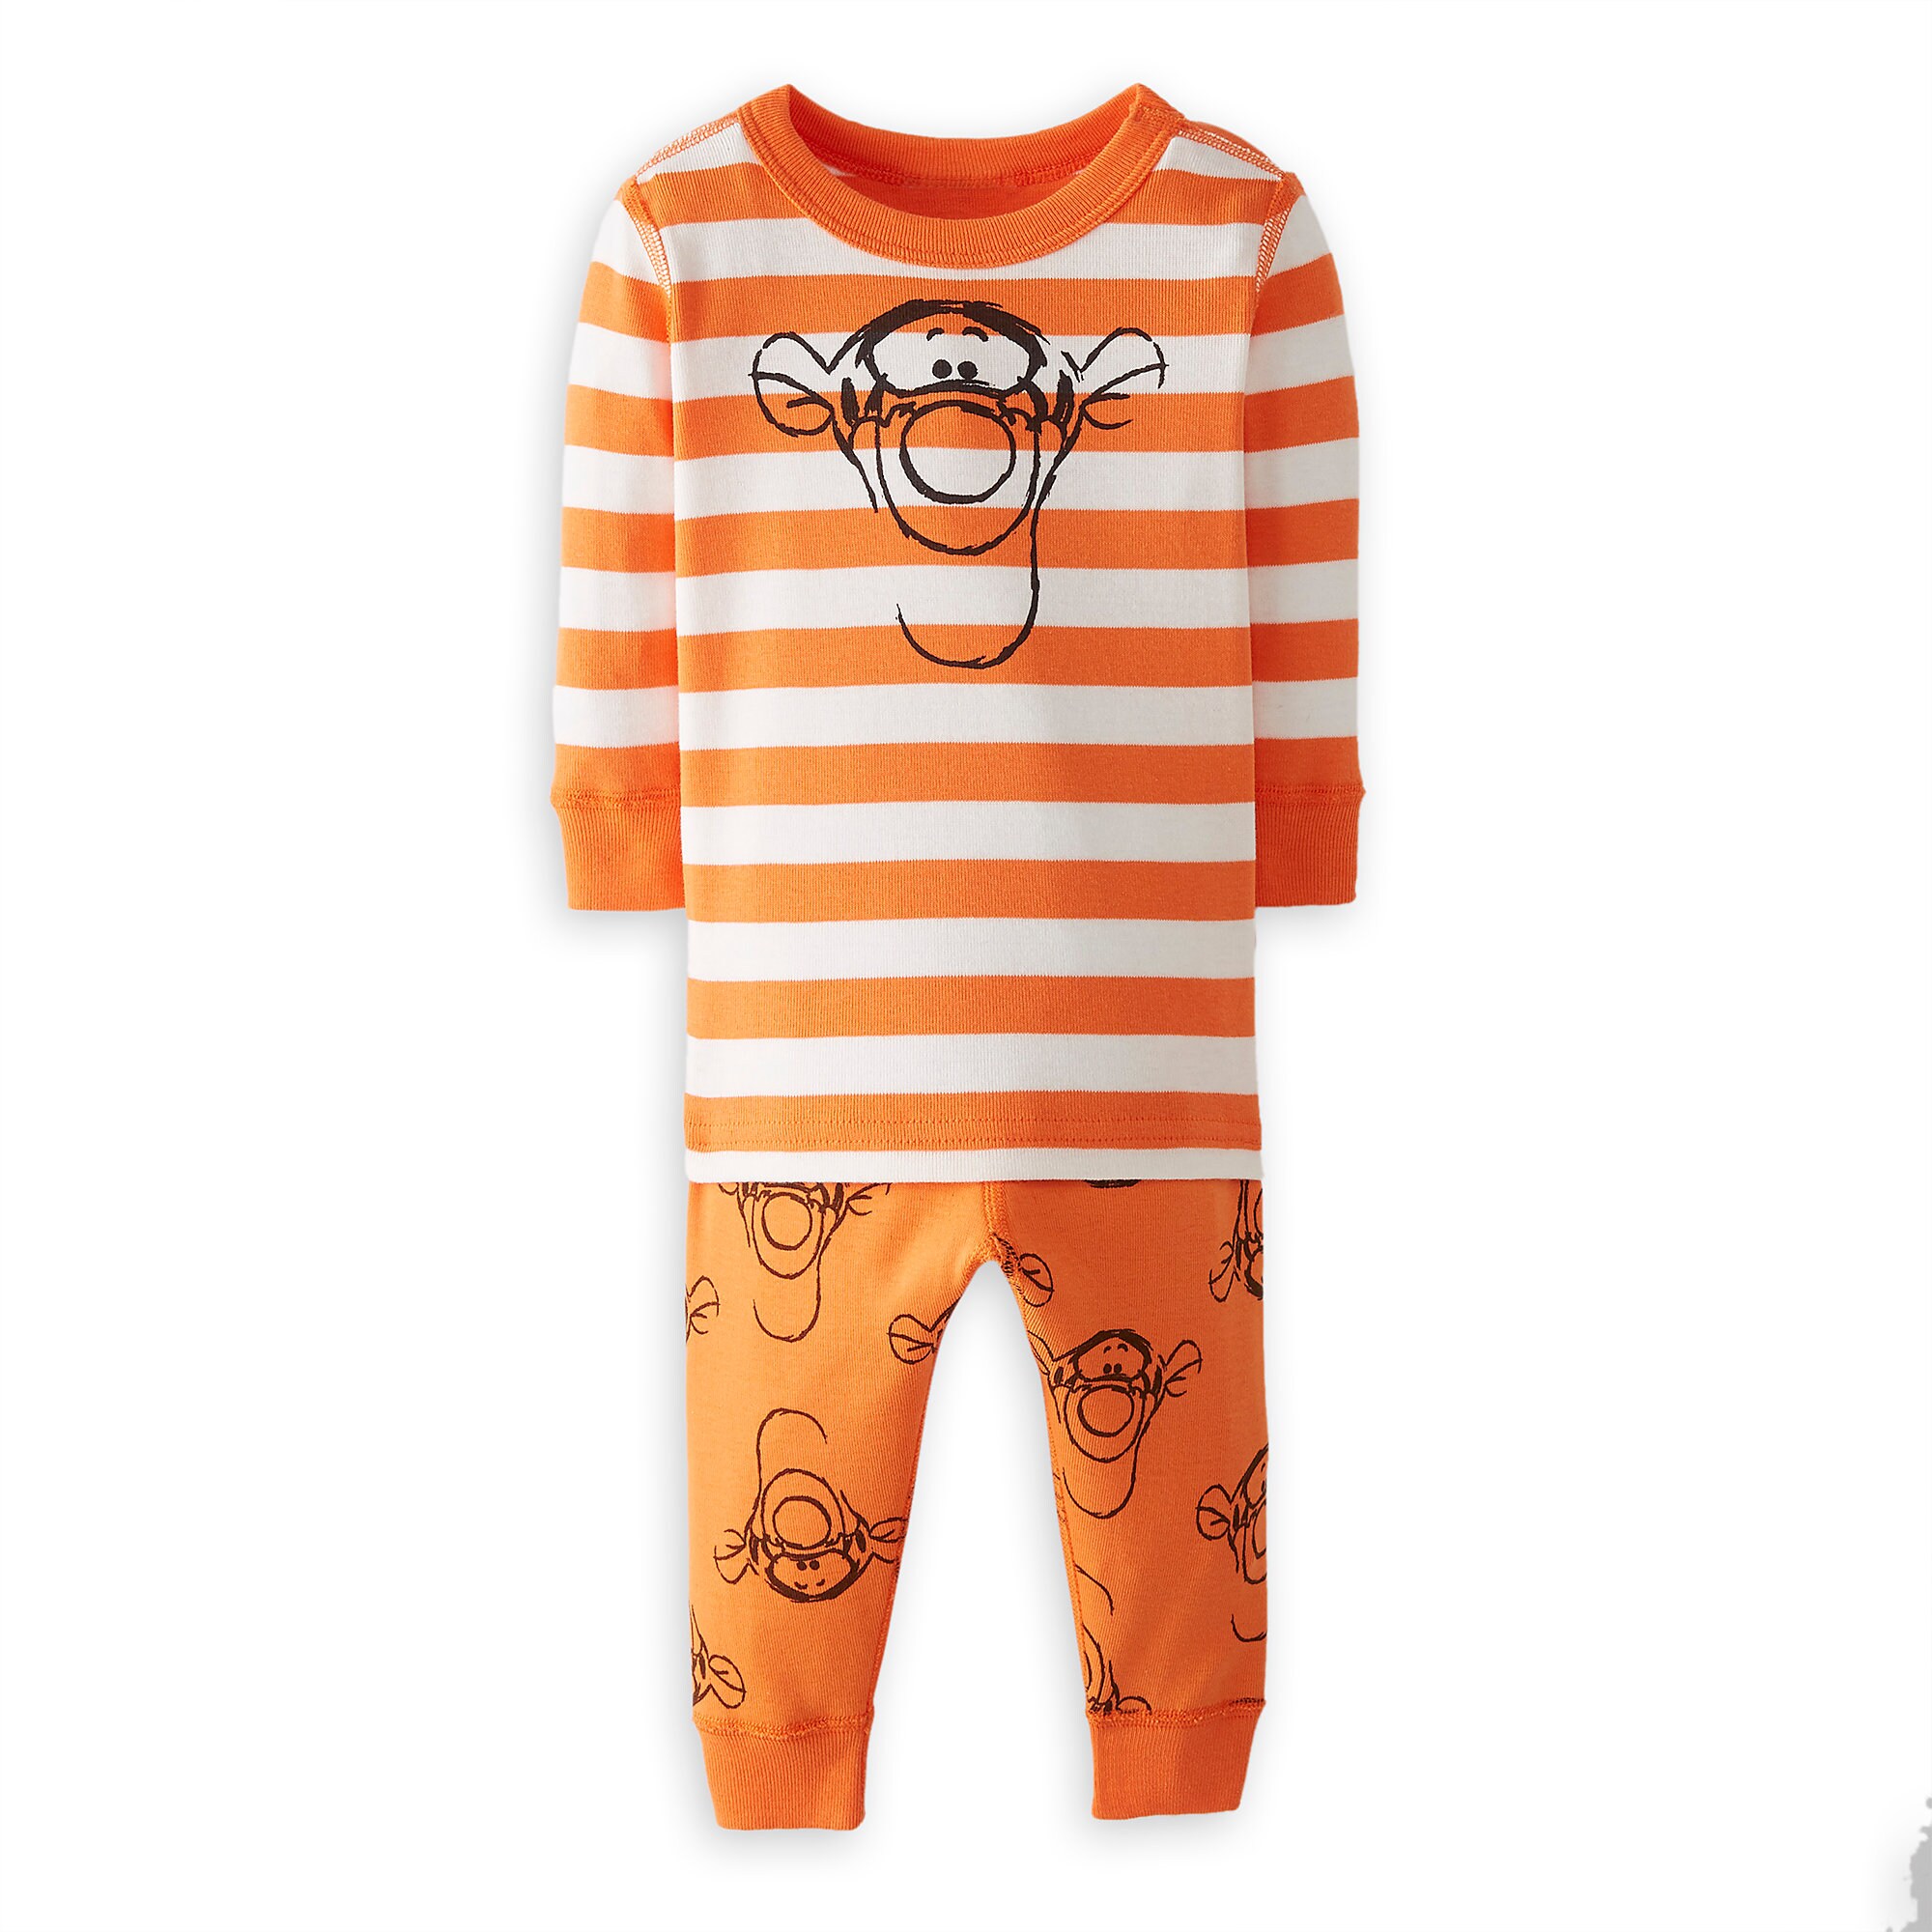 Tigger Organic Long John Pajama Set for Baby by Hanna Andersson